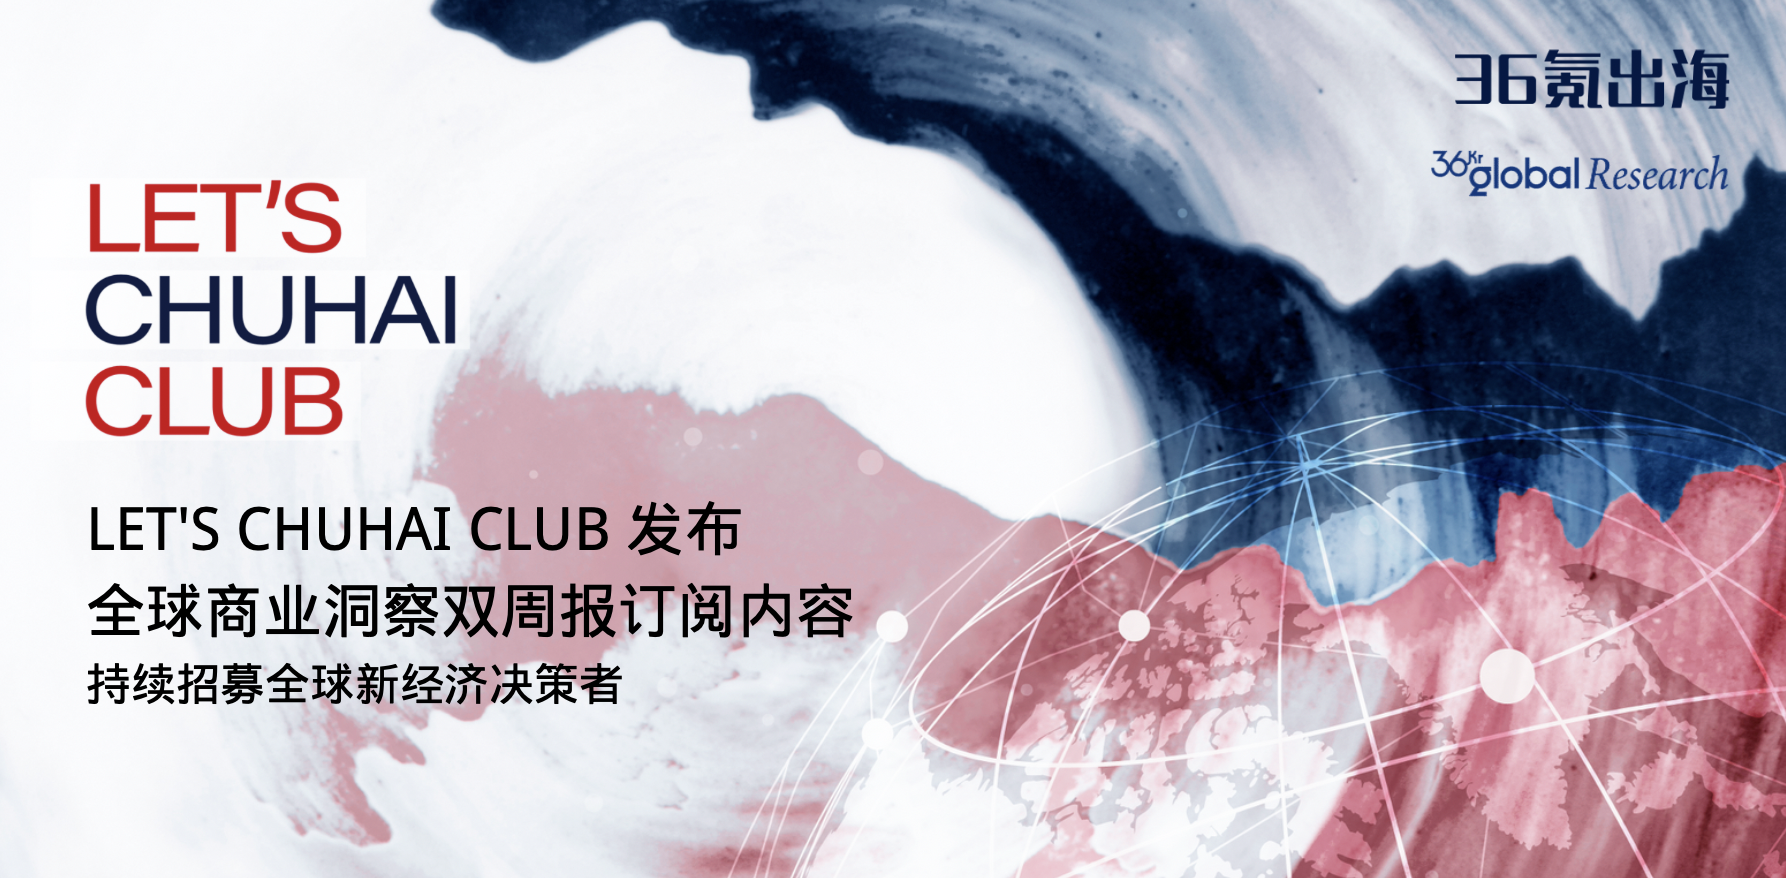 LET’S CHUHAI CLUB 发布《全球商业洞察双周报 Vol.5》订阅内容｜持续招募全球新经济决策者